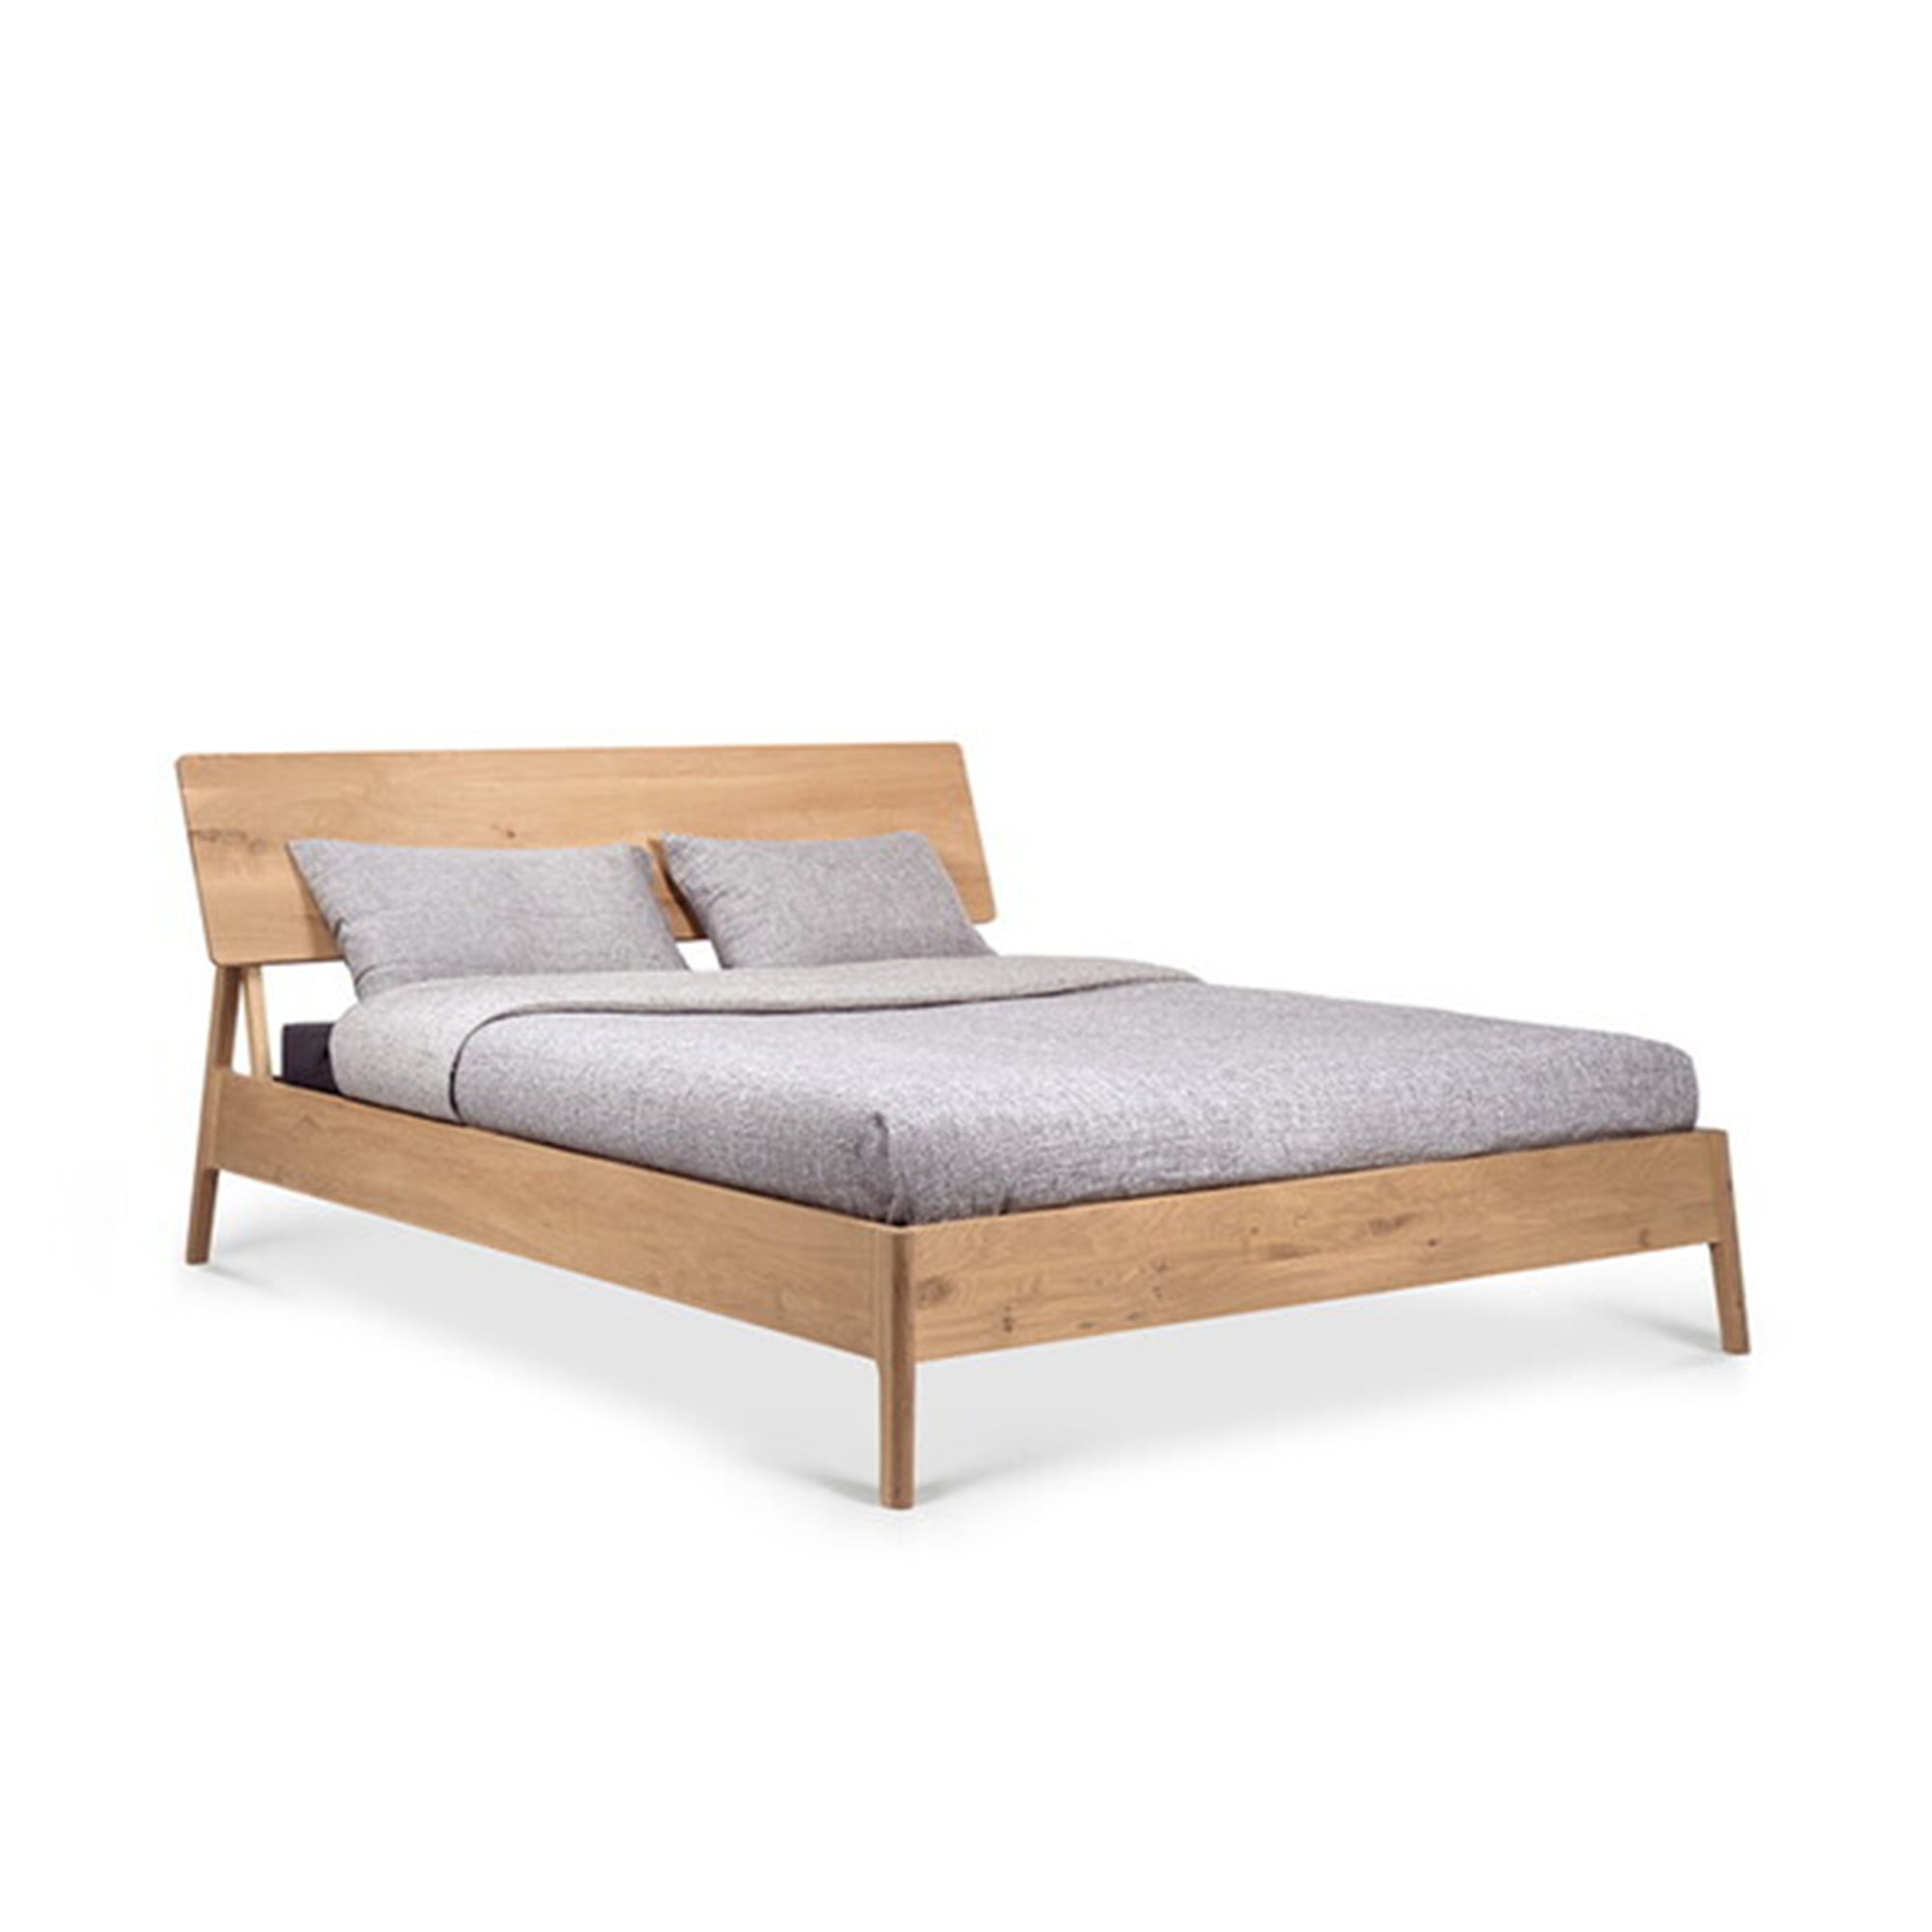 Oak Air bed